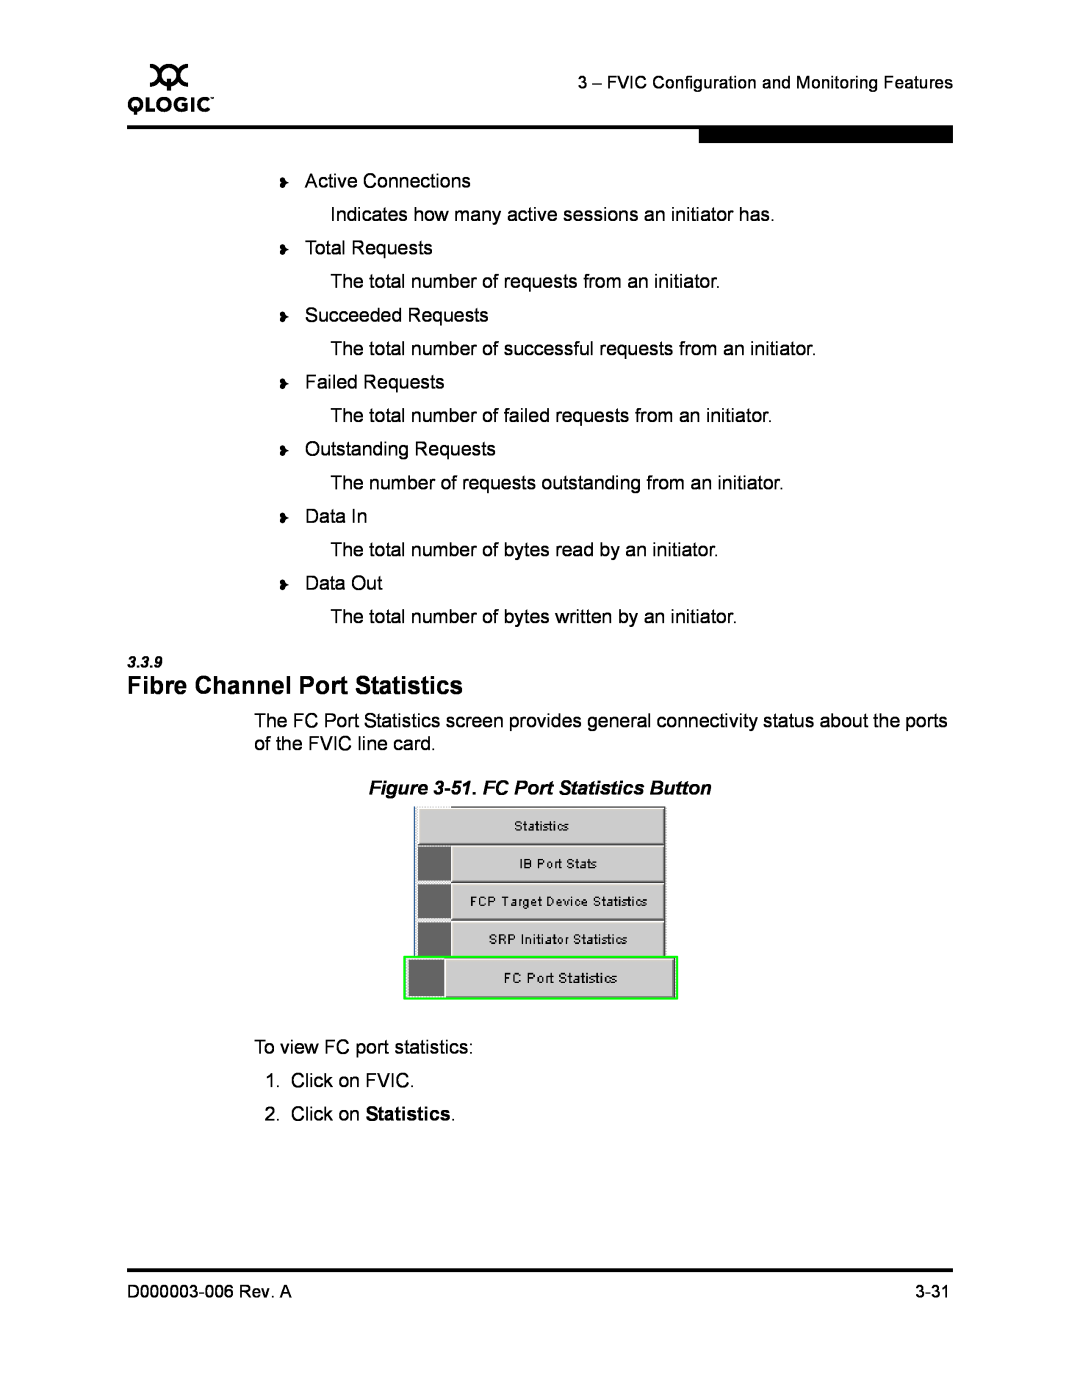 Q-Logic 9000 manual Fibre Channel Port Statistics, 51. FC Port Statistics Button 